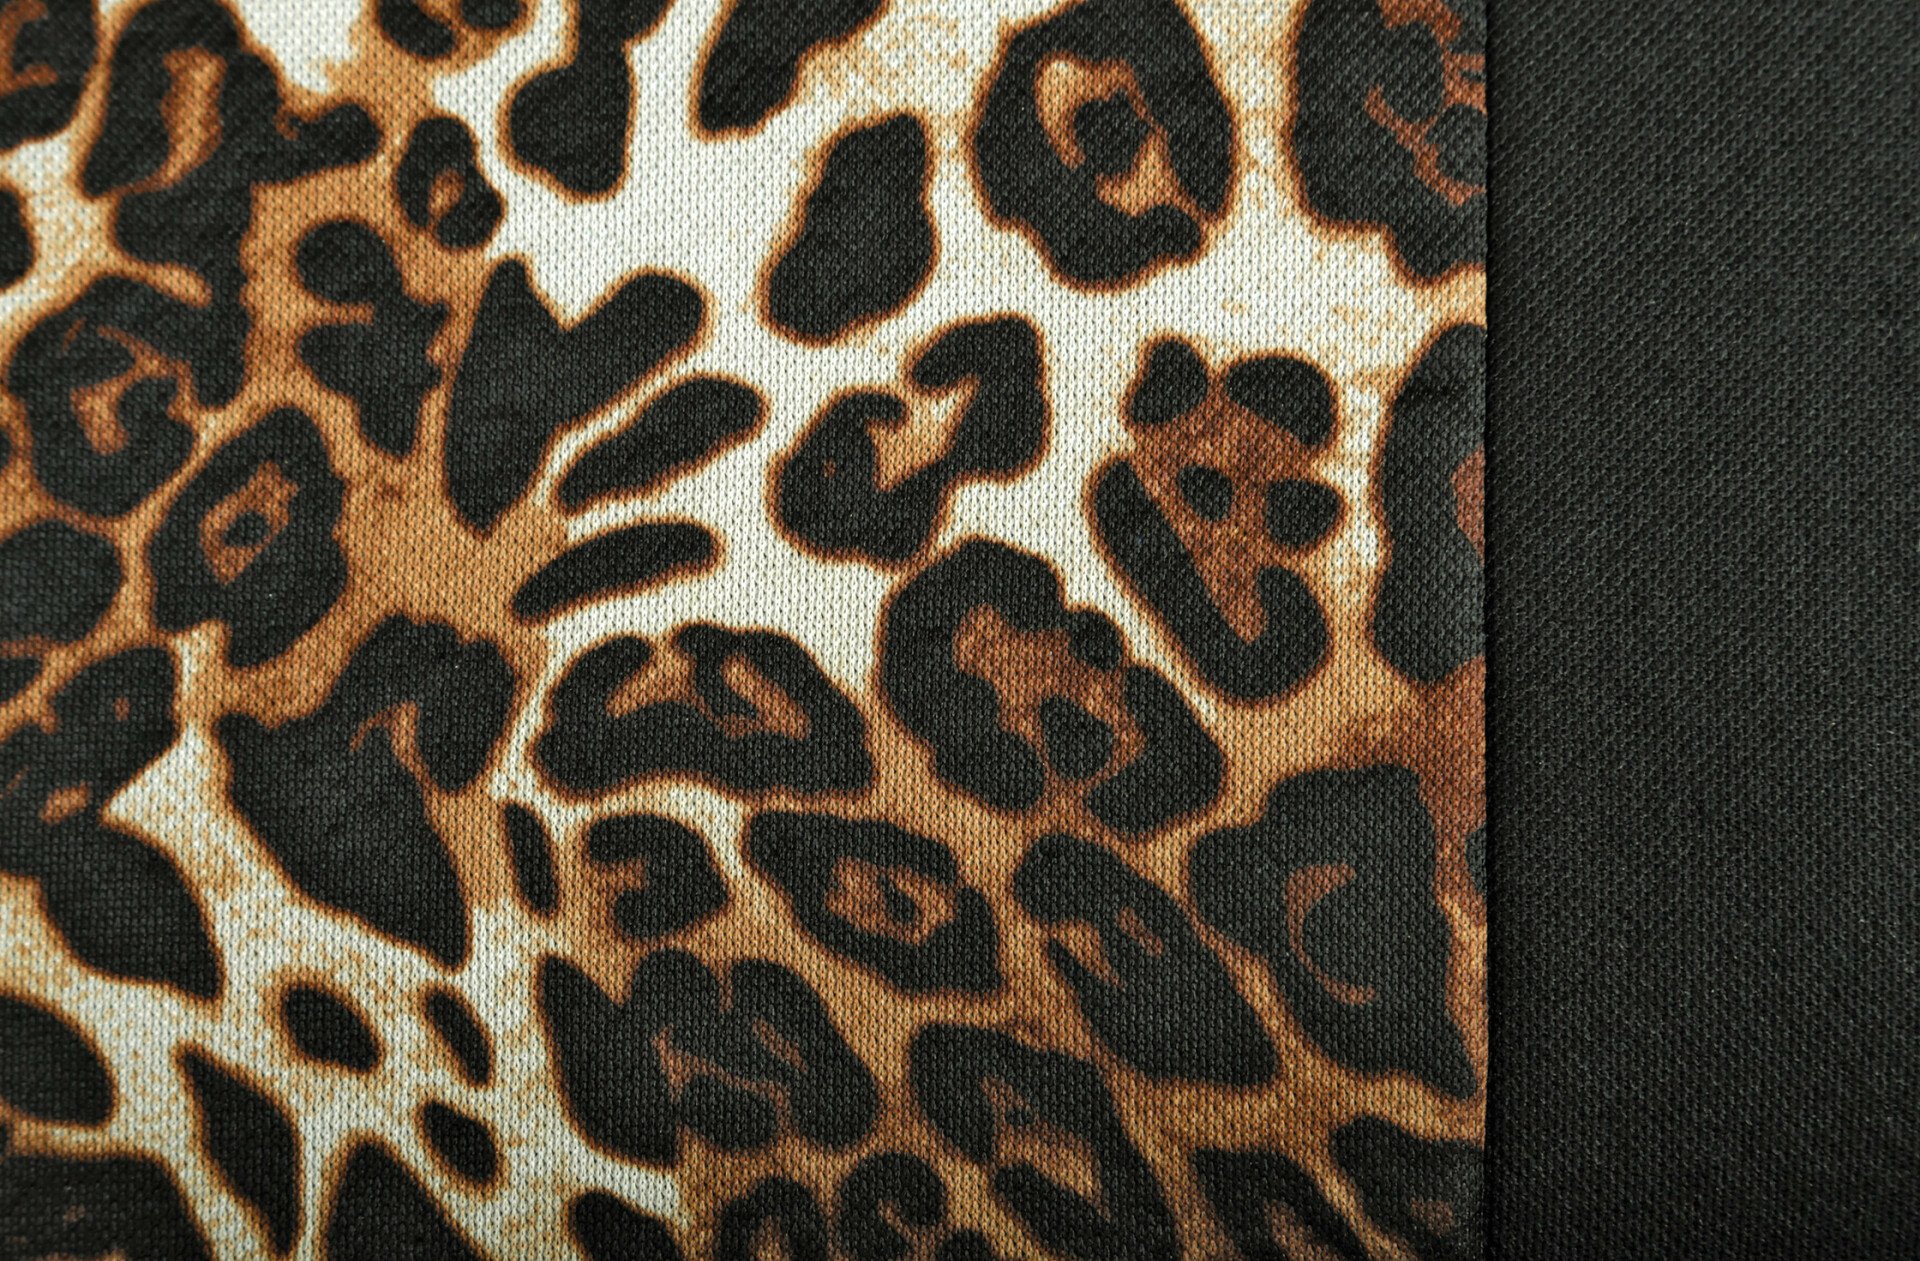 Leopard seat cover set 9pcs thumb